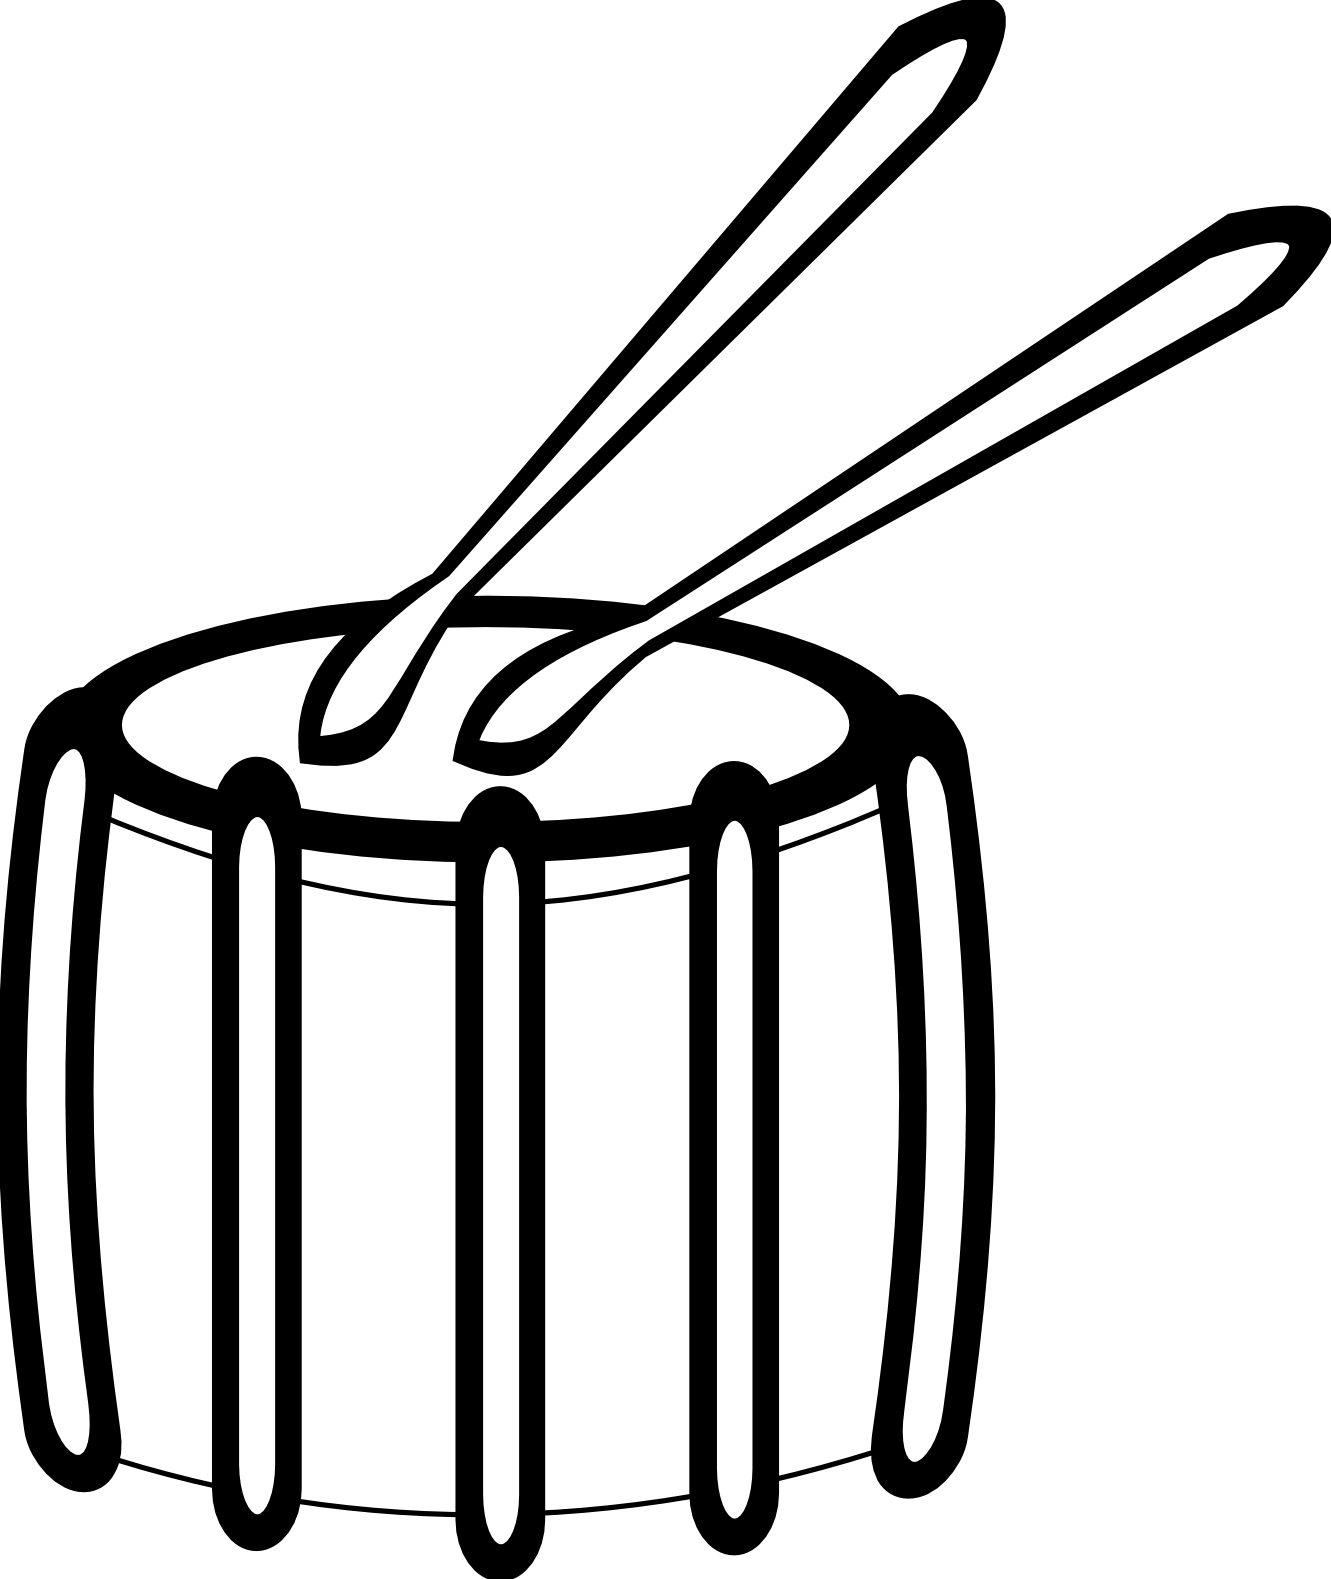 Snare drum clip art | Clipart Panda - Free Clipart Images